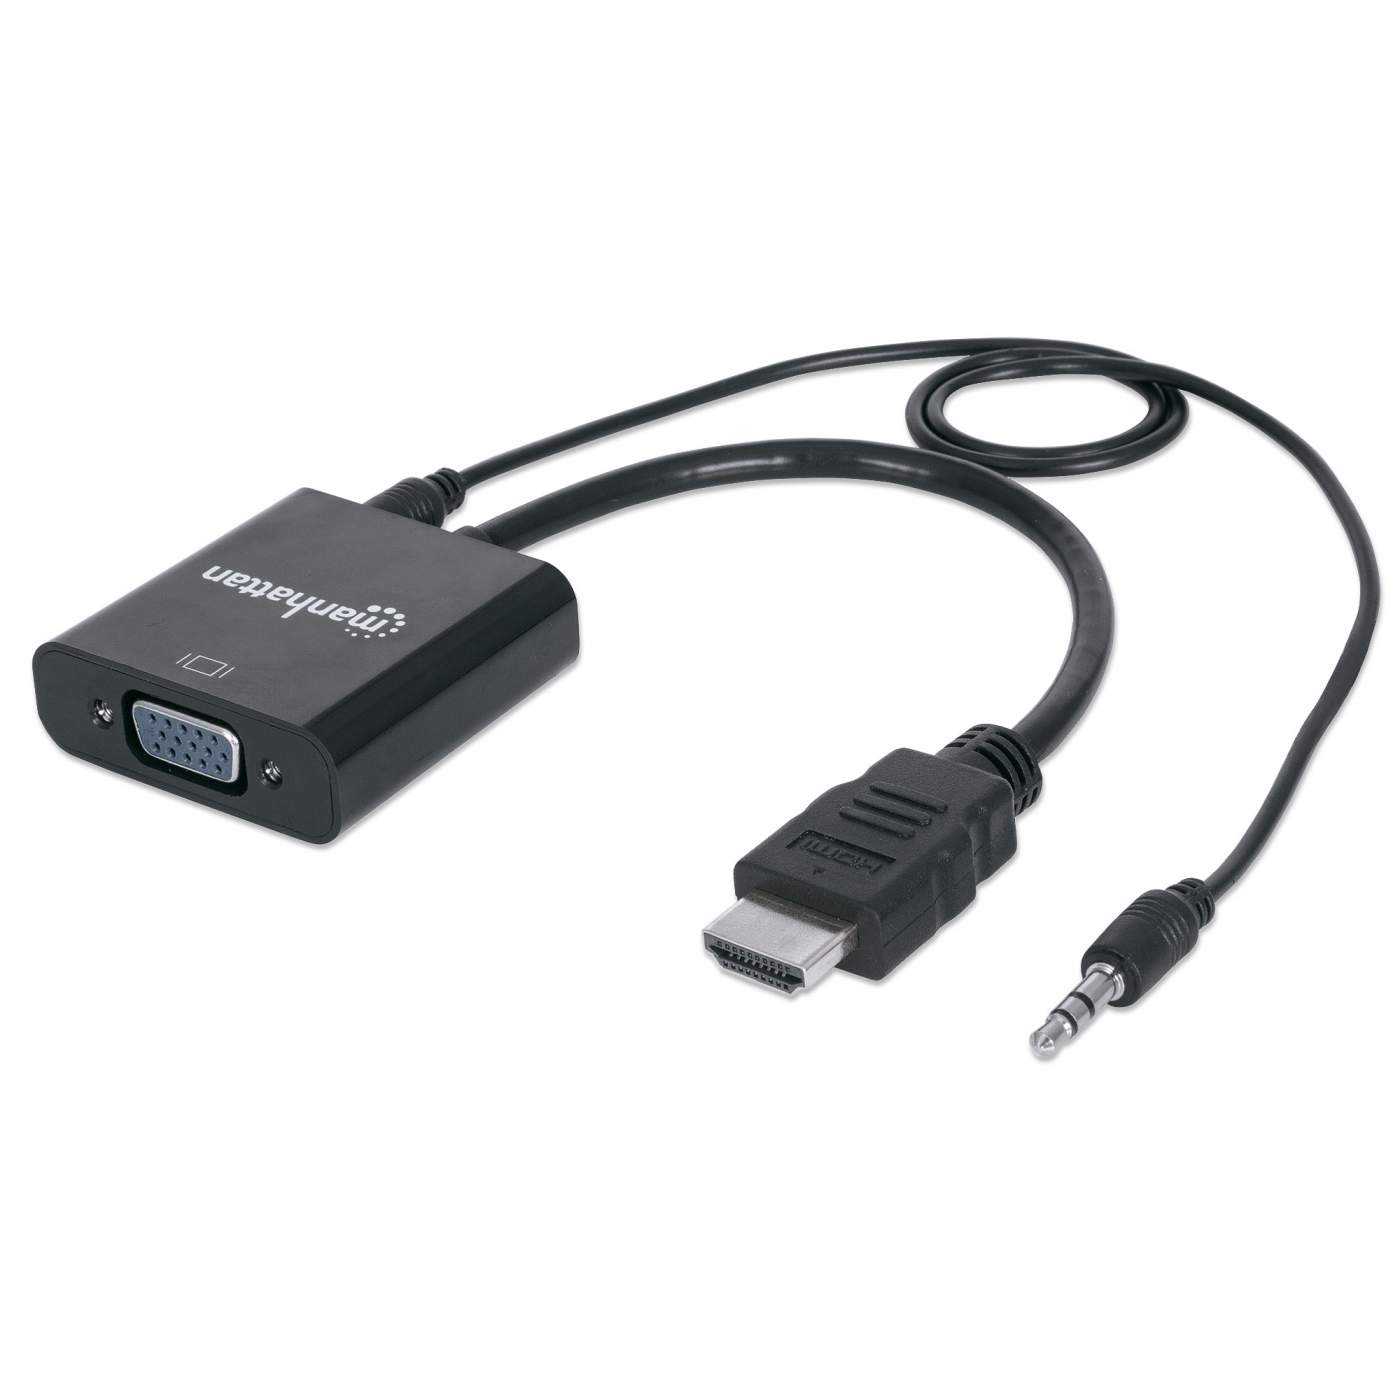 Manhattan HDMI to VGA Converter (151559)